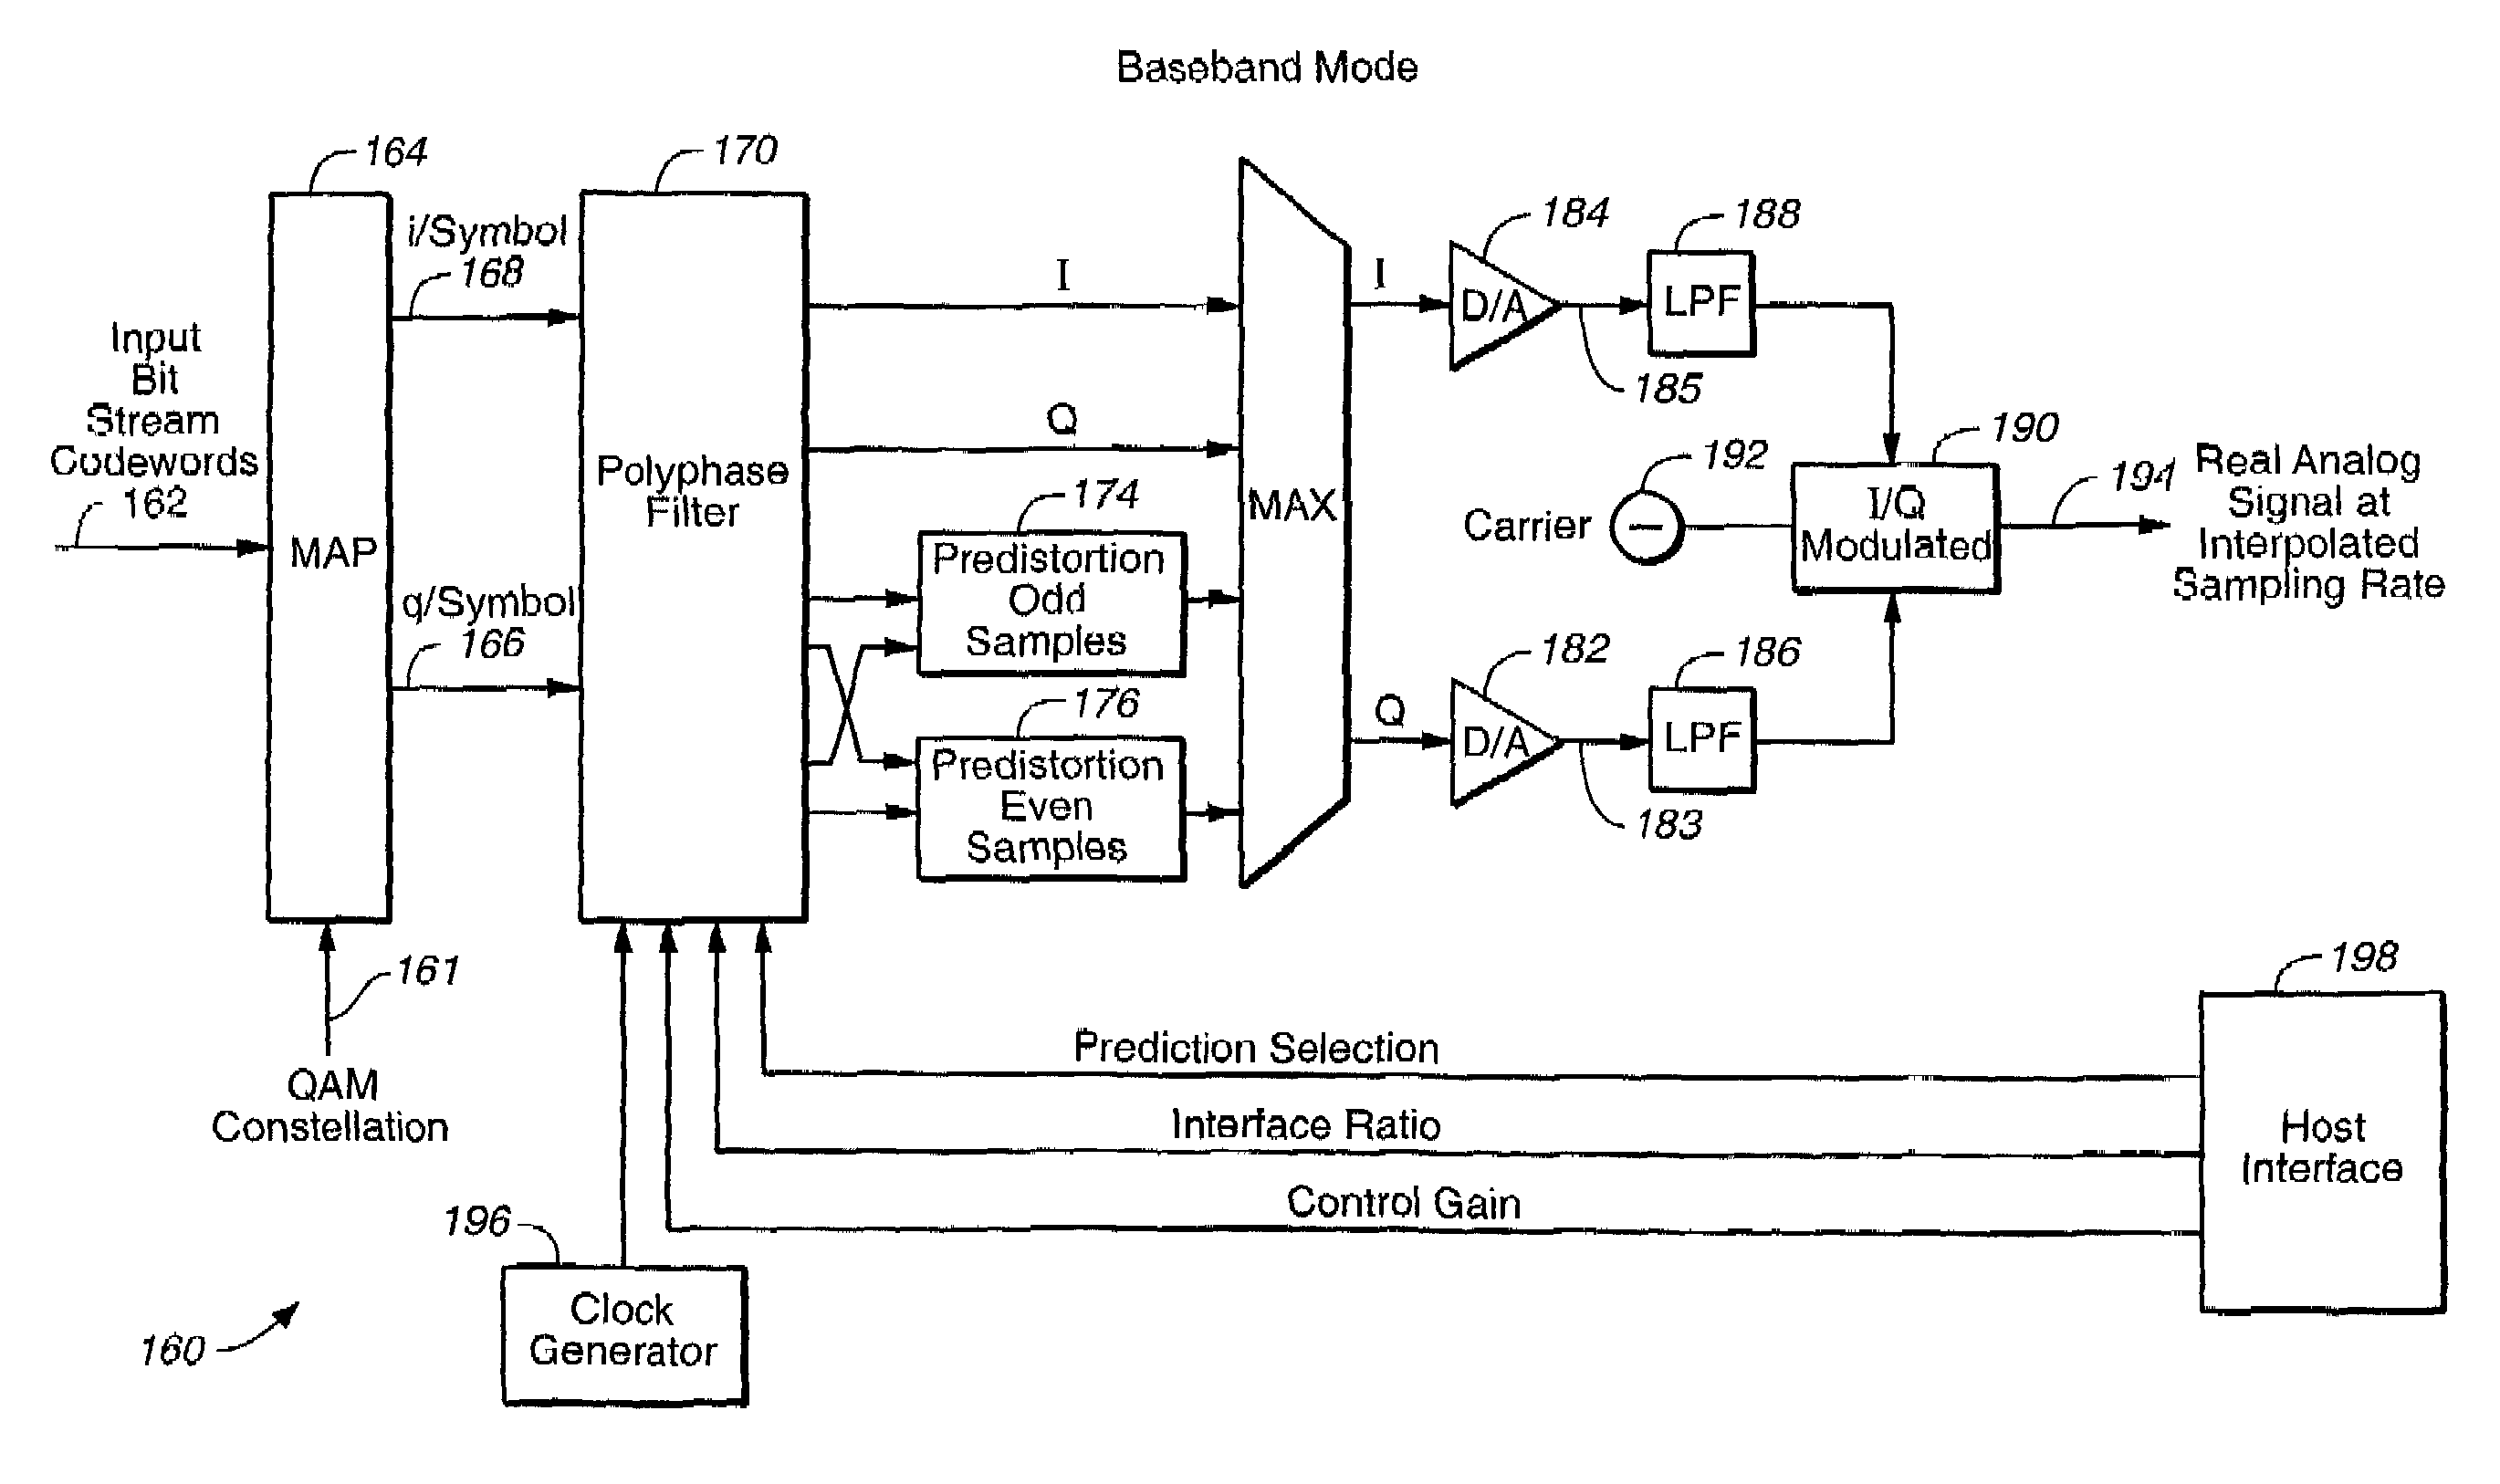 Flexible multimode QAM modulator